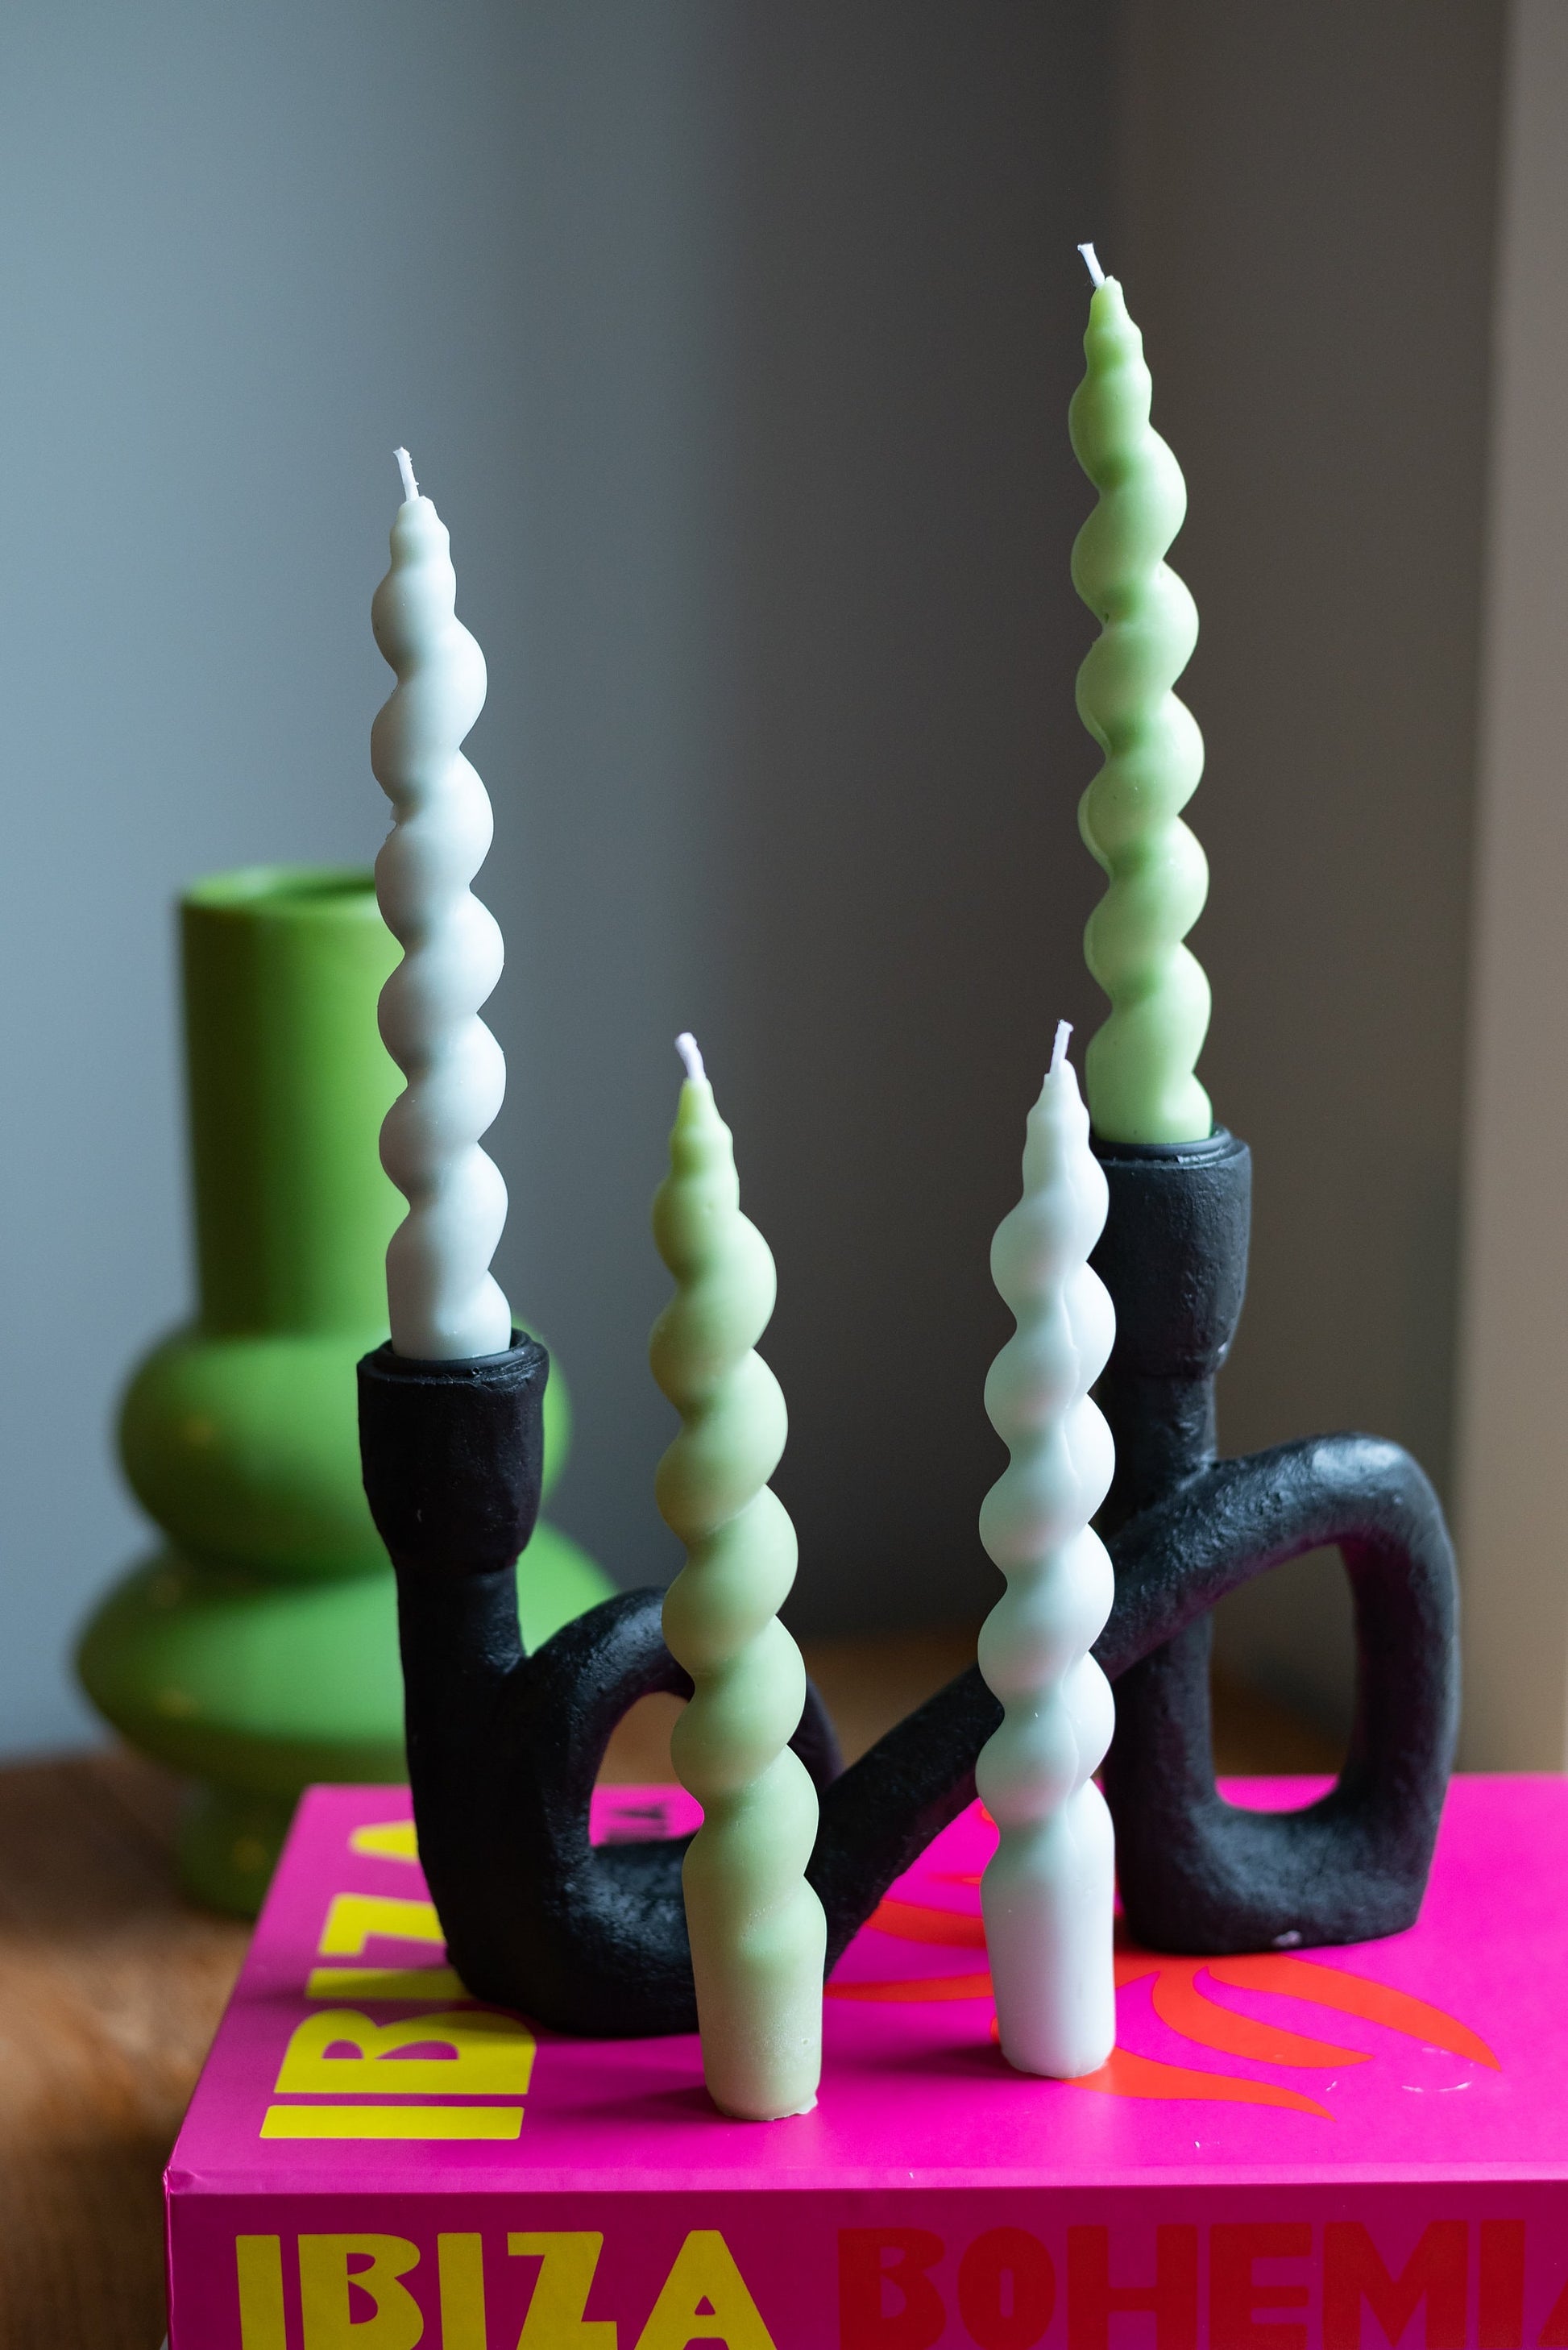 Pillar Candle / Twisted Pillar / Dinning Room Candle / Candle / Pillar Candle / Custom Made Candle